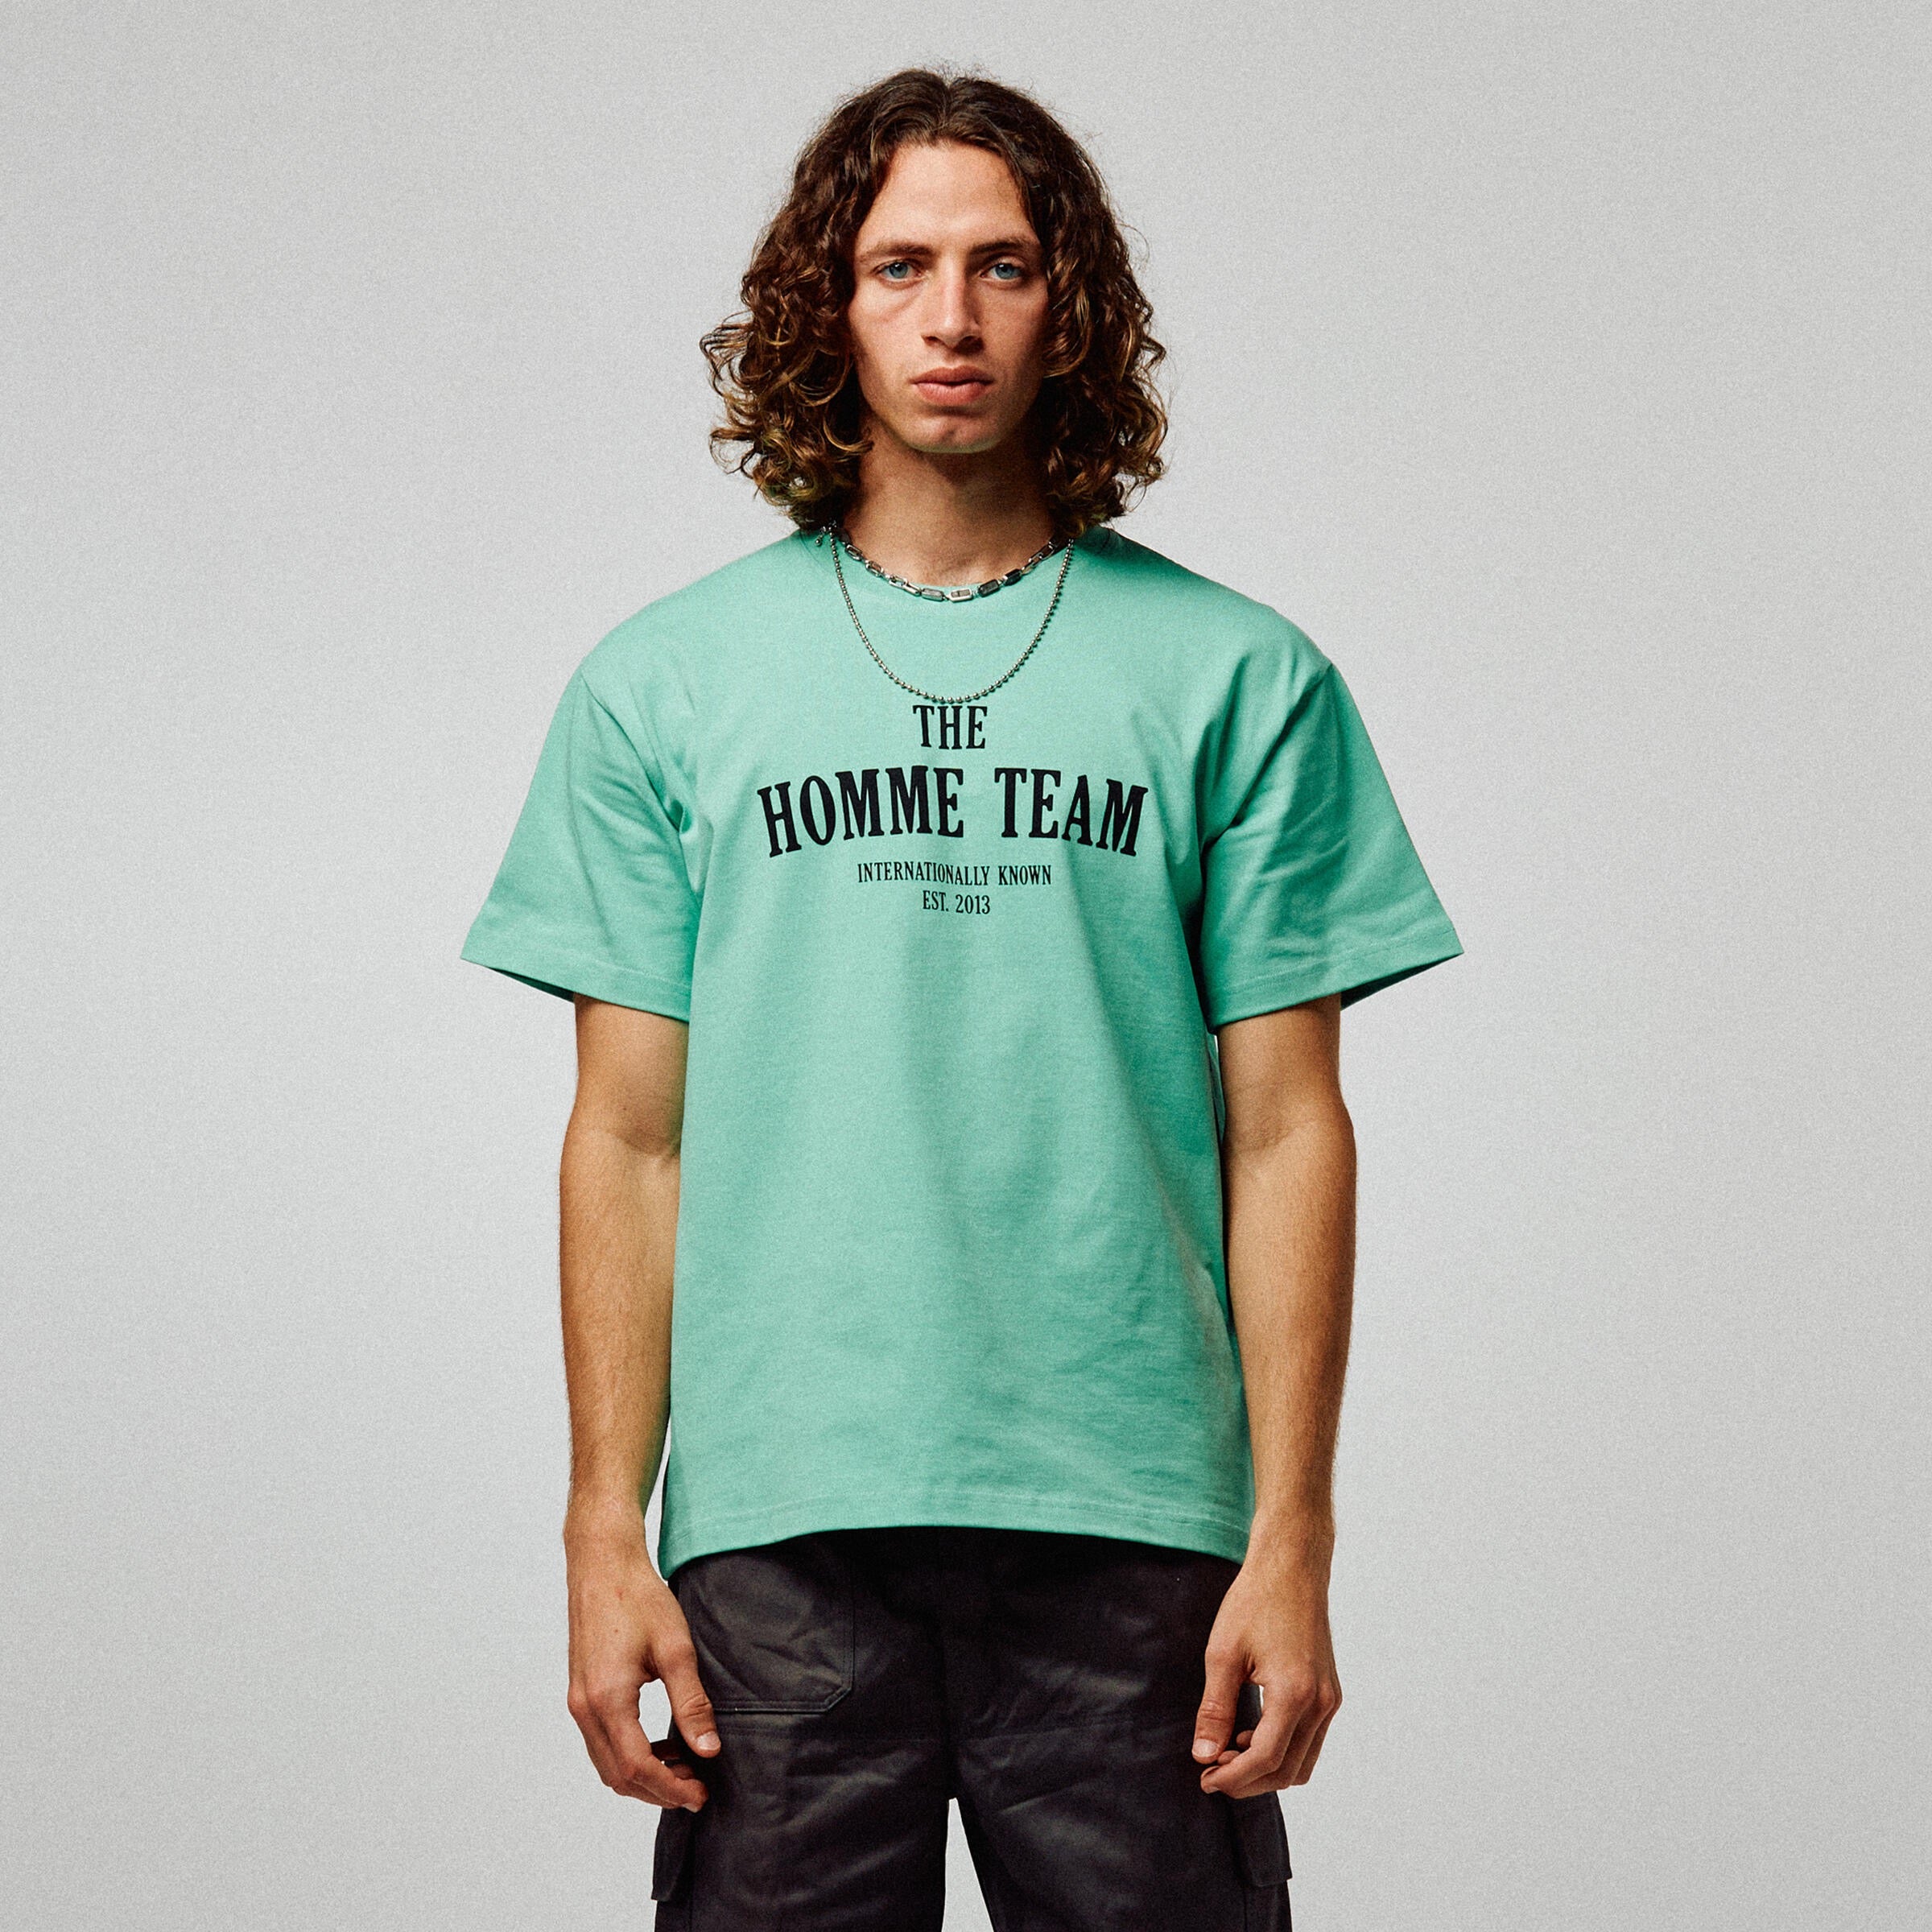 Homme + Femme Tee Shirt - Homme Team